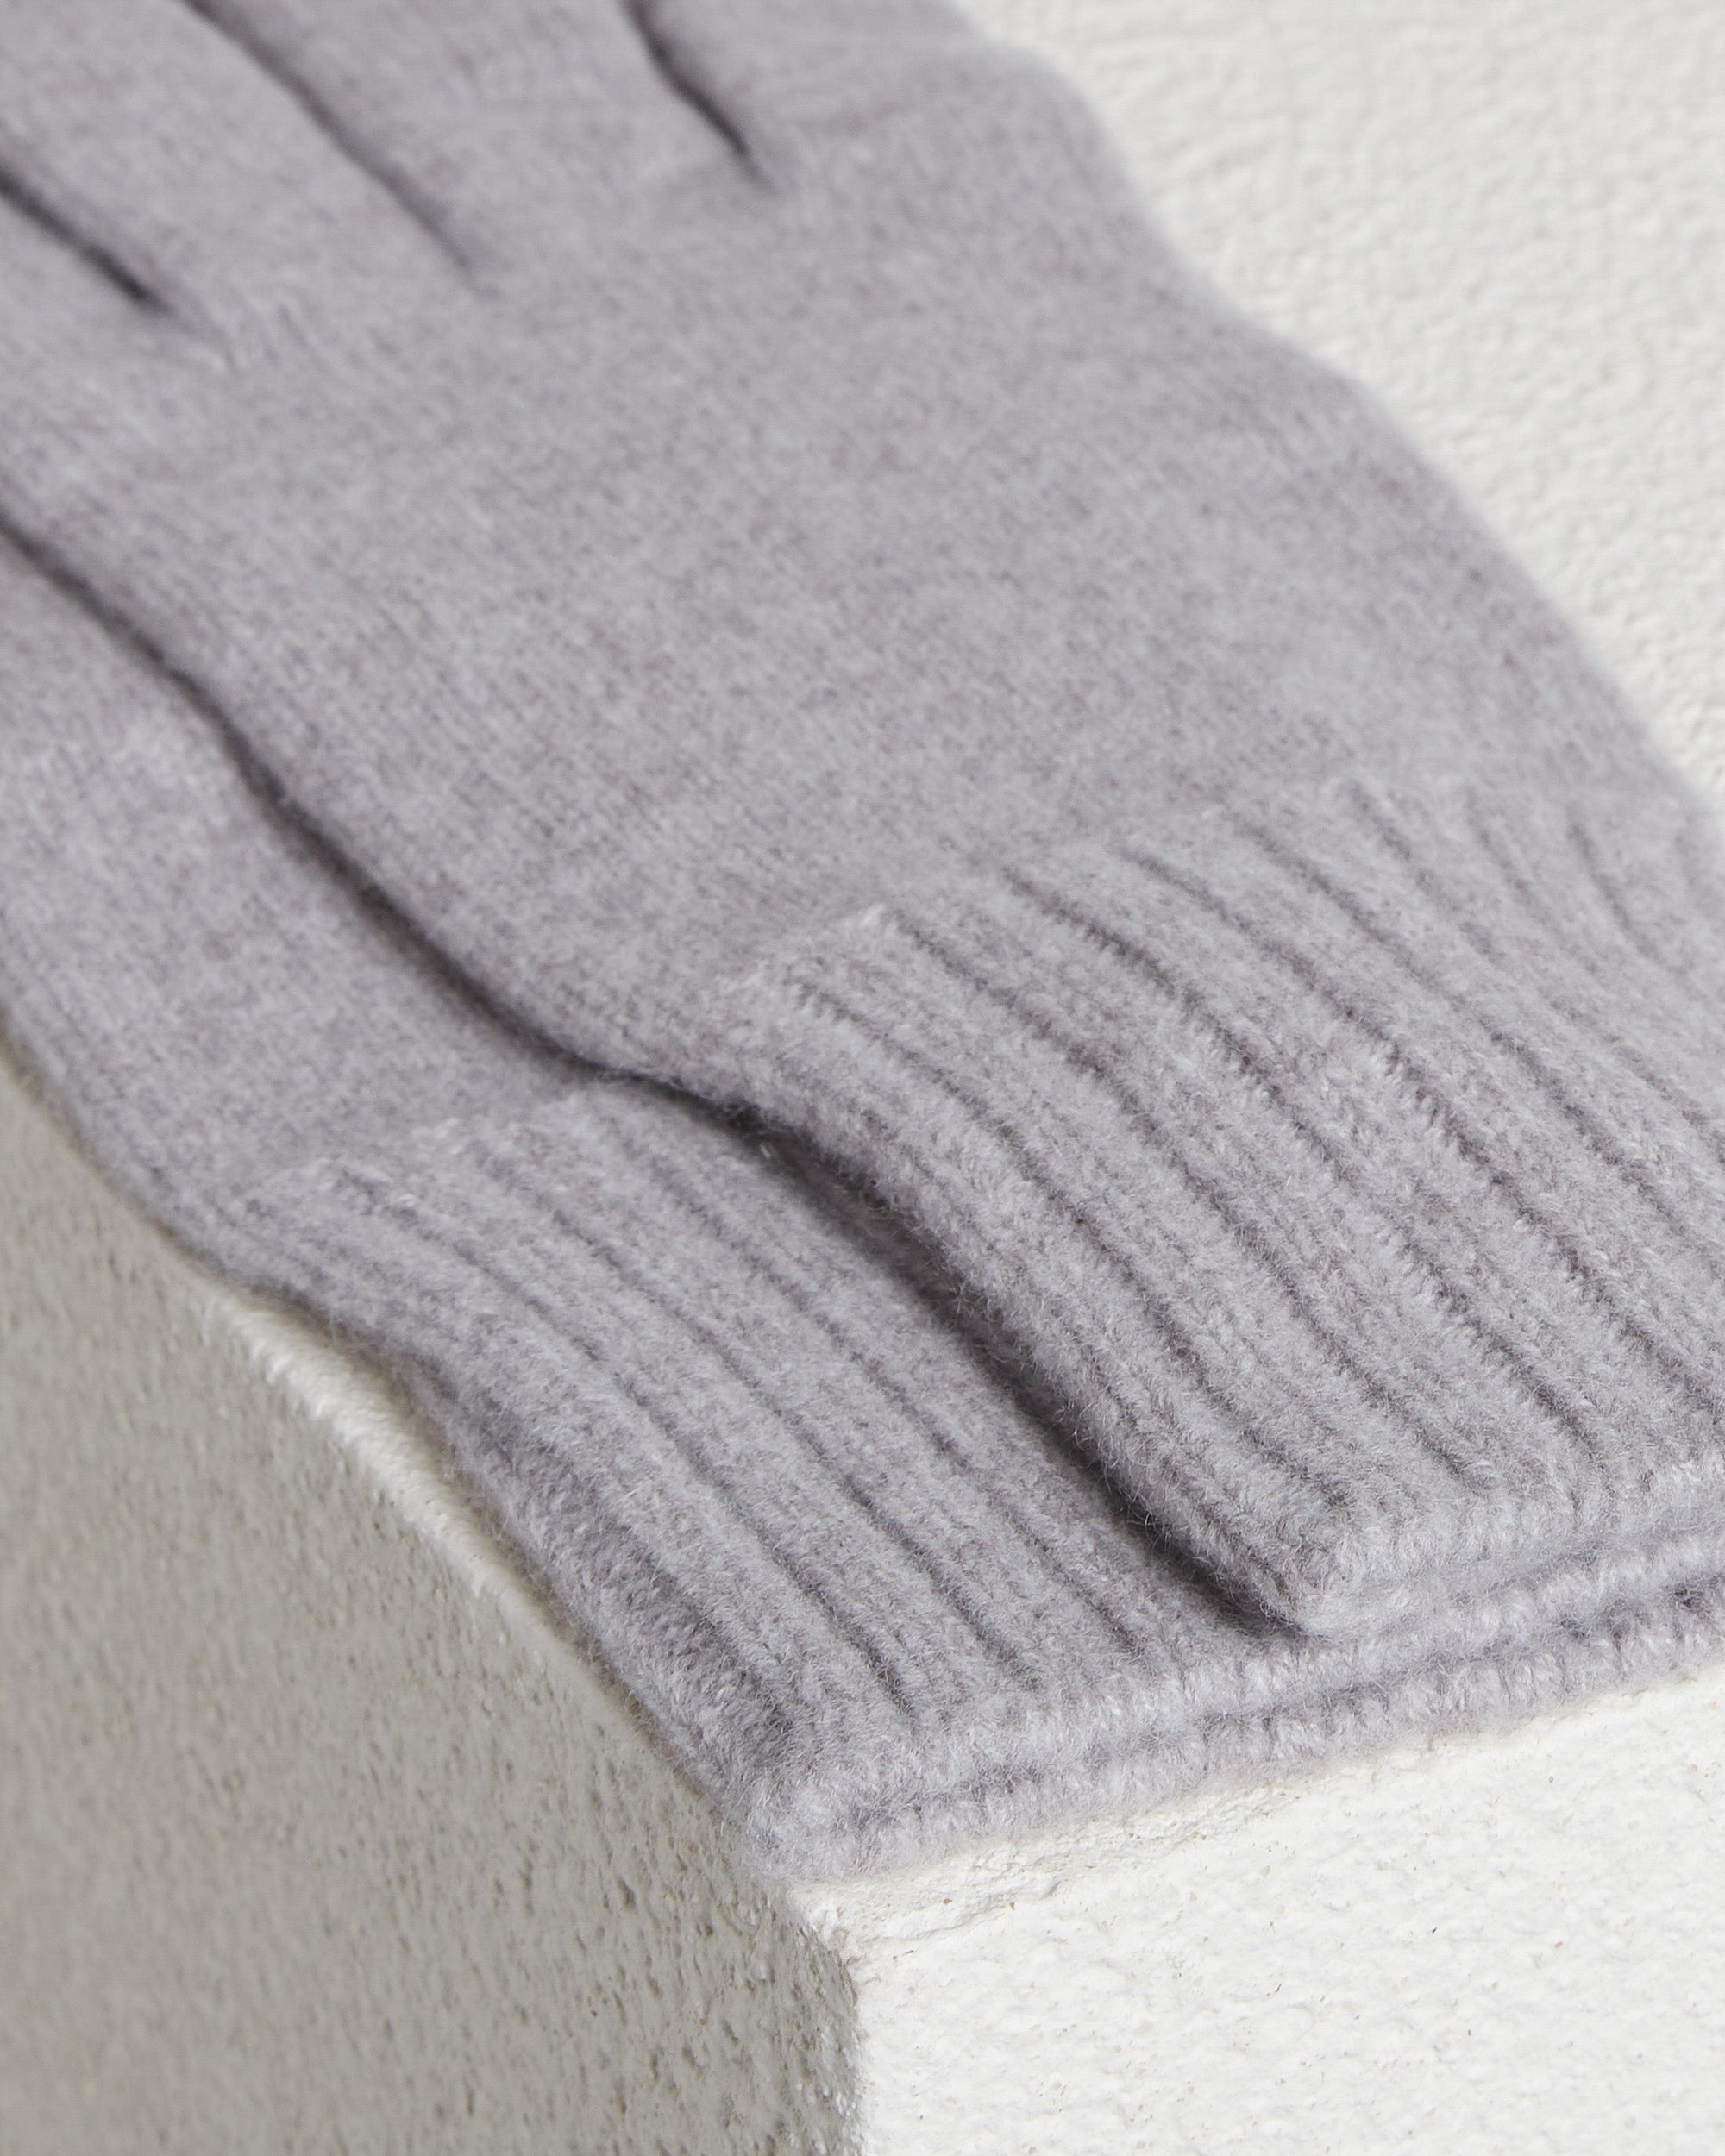 Beige Cashmere knitted gloves